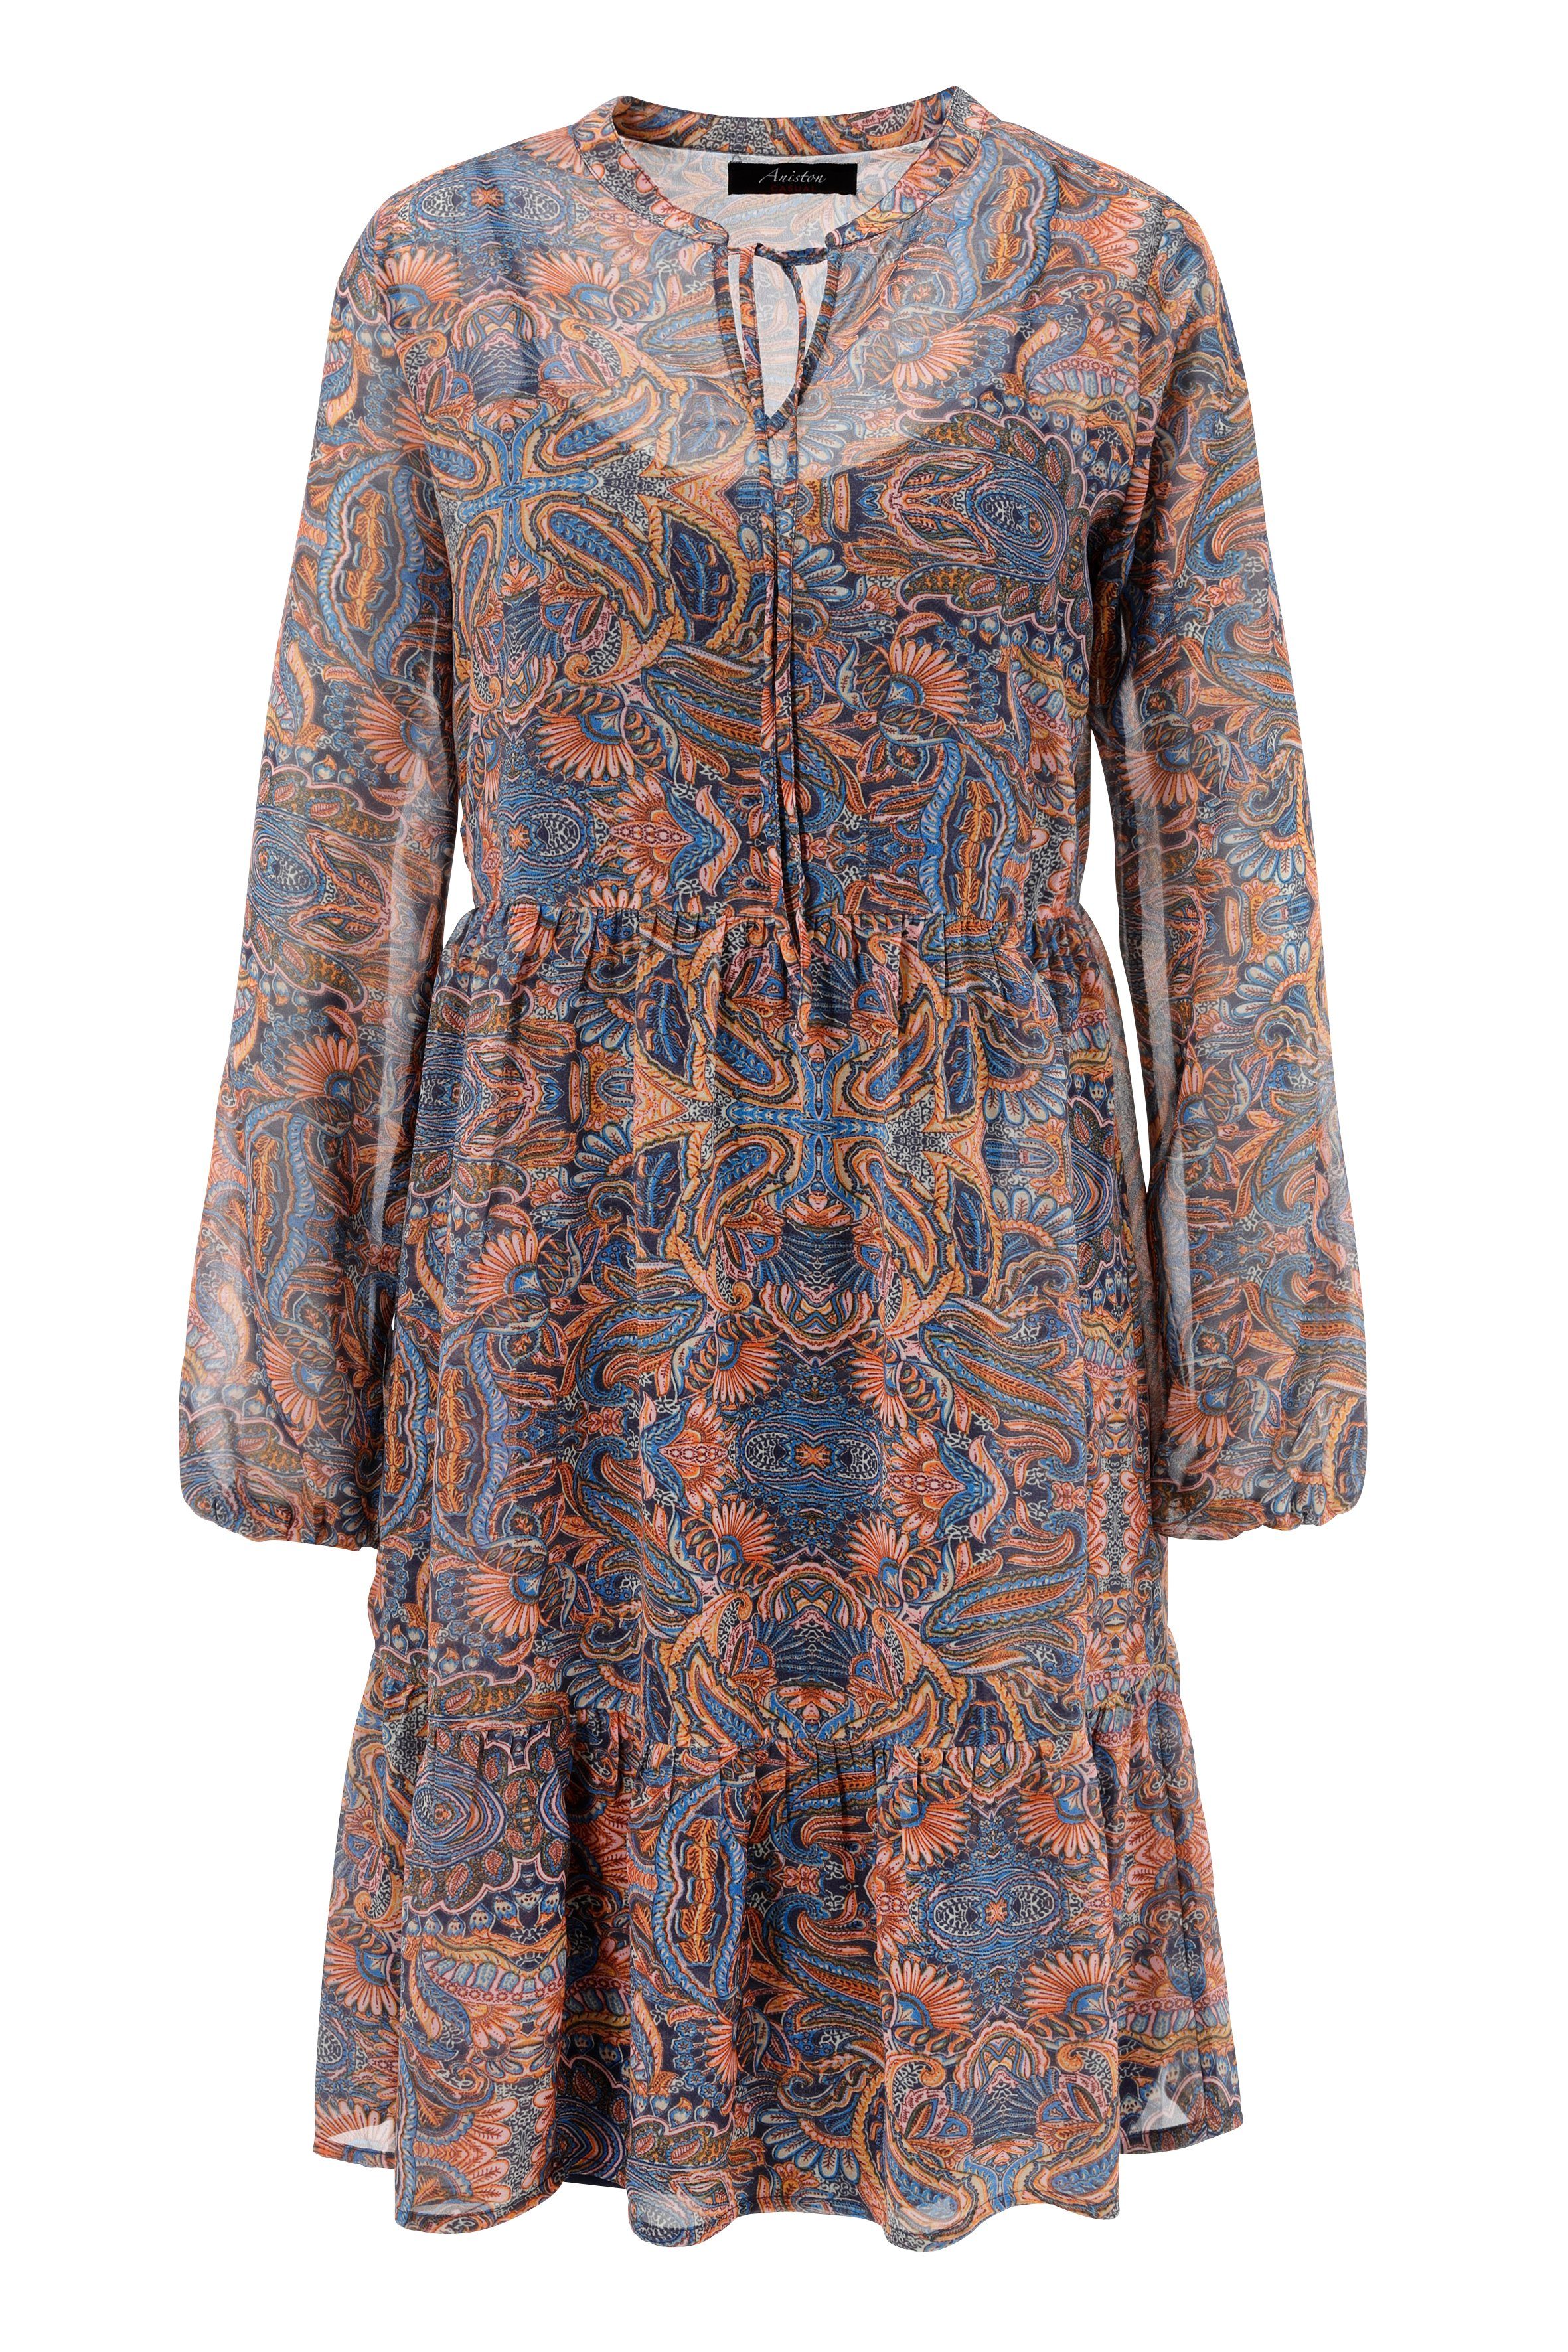 Blusenkleid bedruckt phantasievollem CASUAL mit Aniston Paisley-Muster